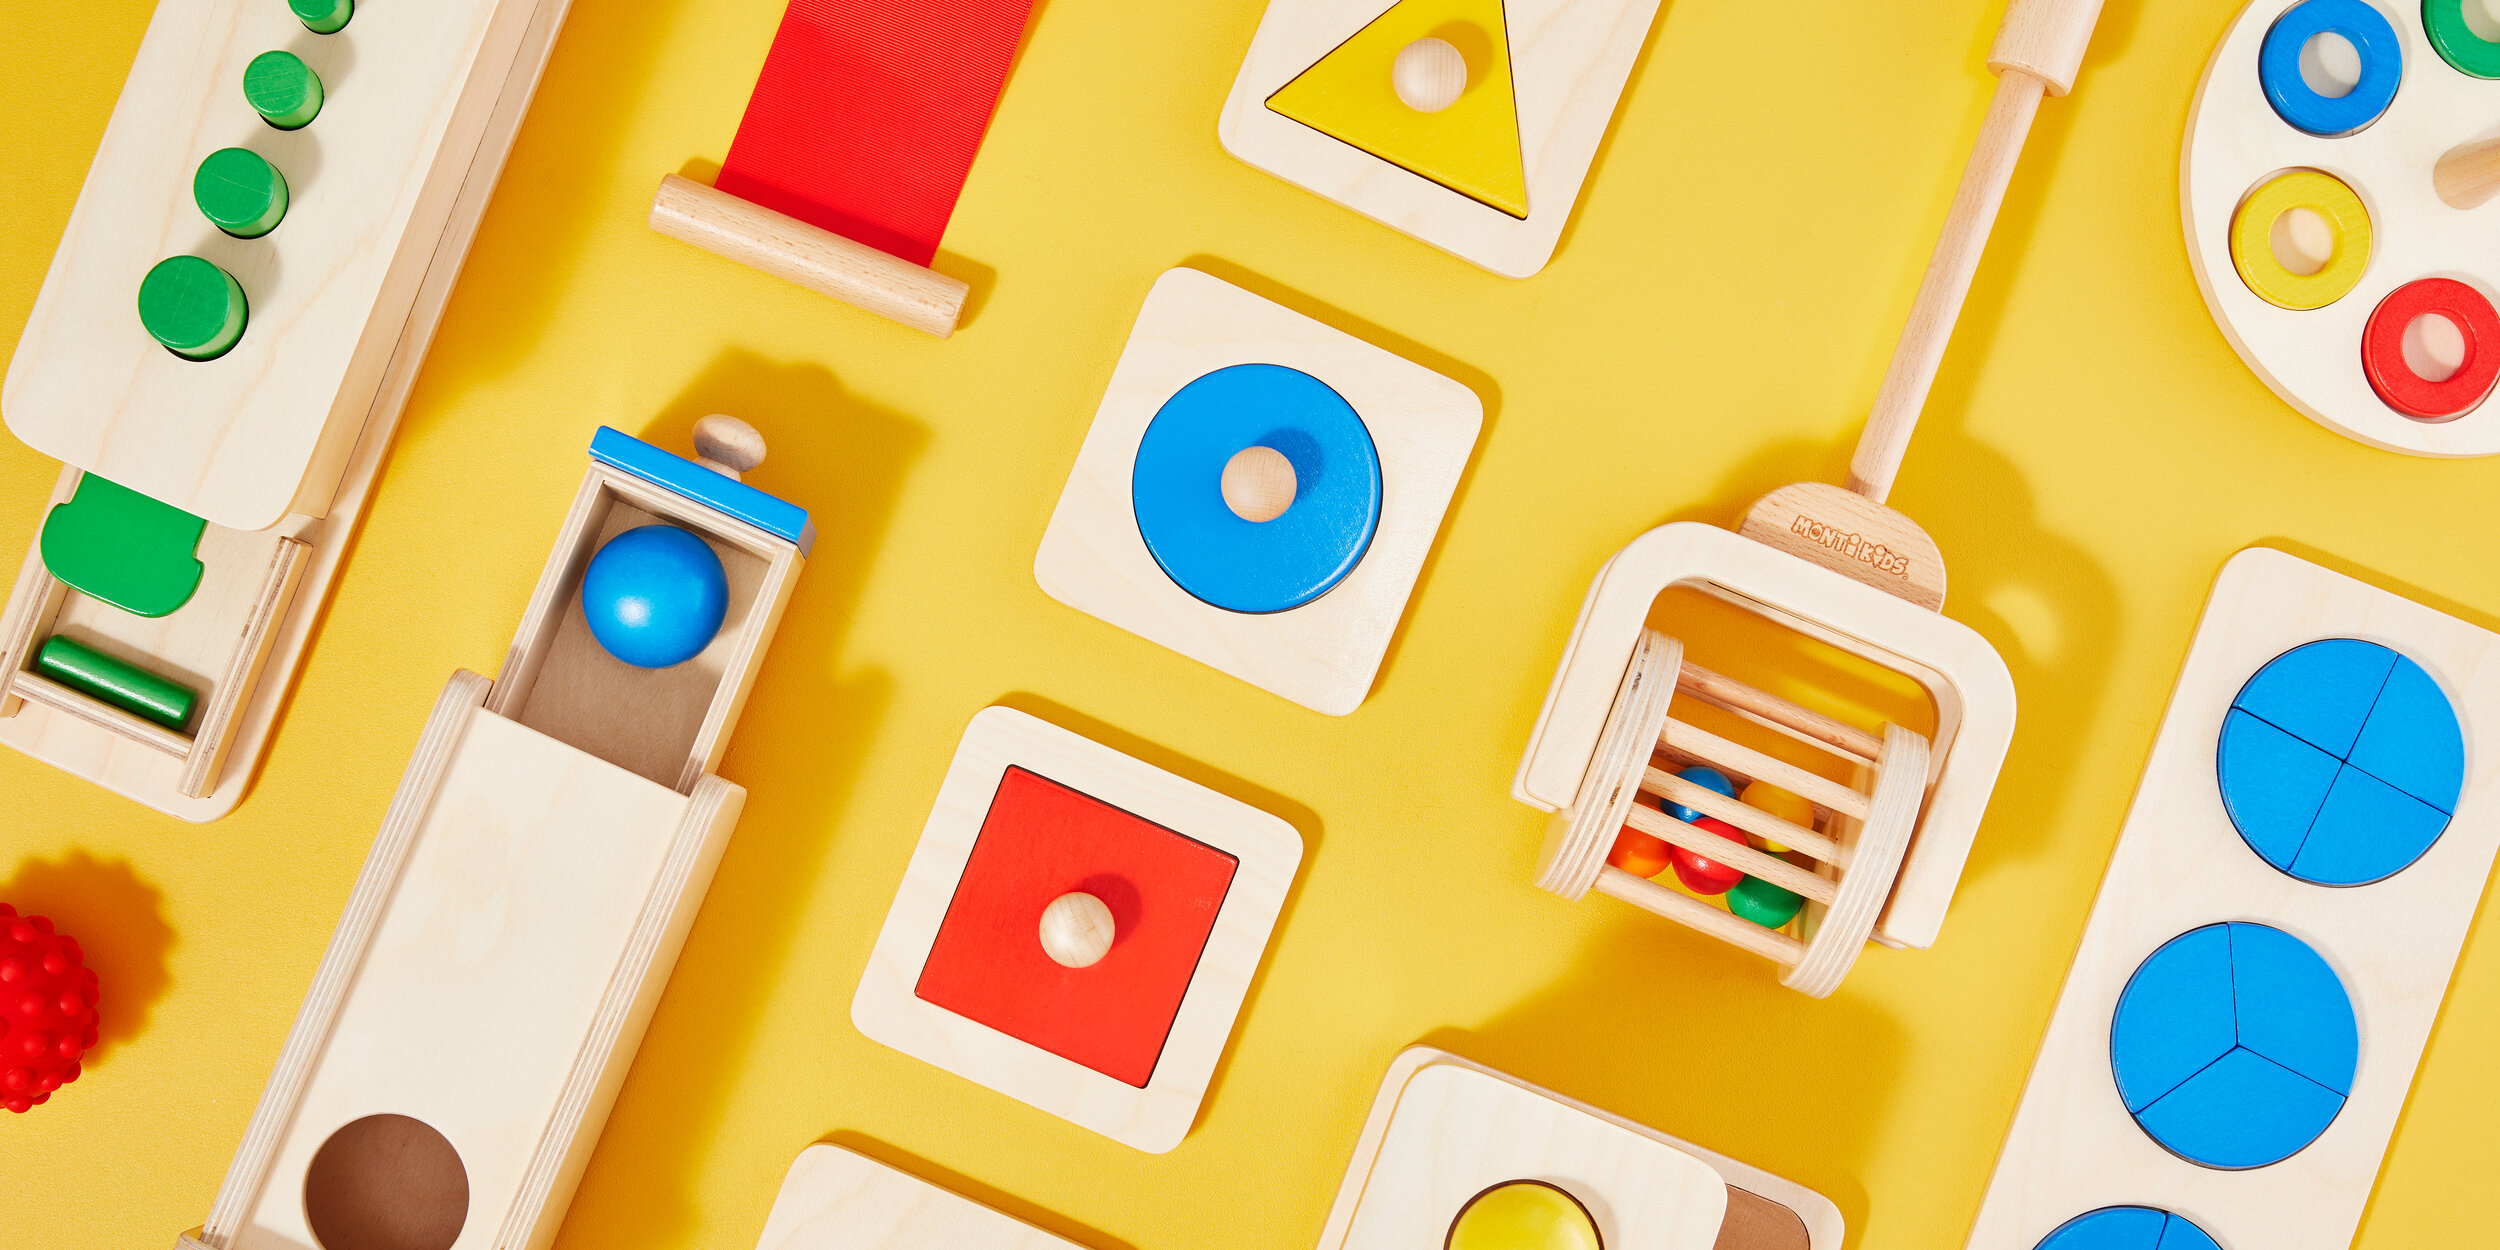 tidepool-simmons-montikids-grid-laydown-kids-toys-colorful